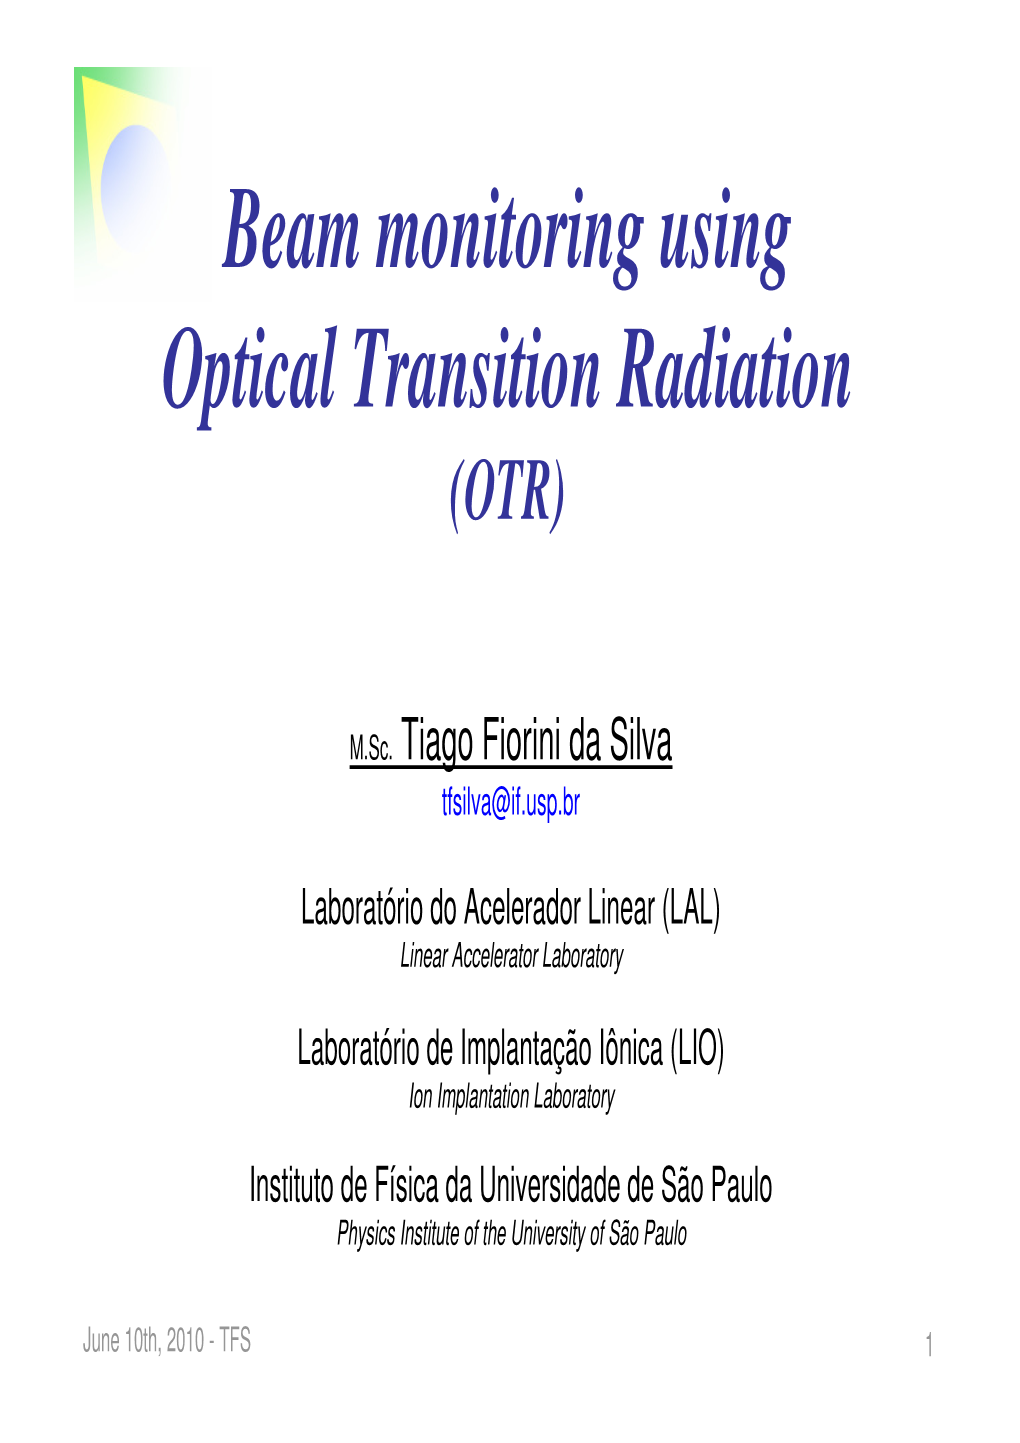 Beam Monitoring Using Optical Transition Radiation (OTR)